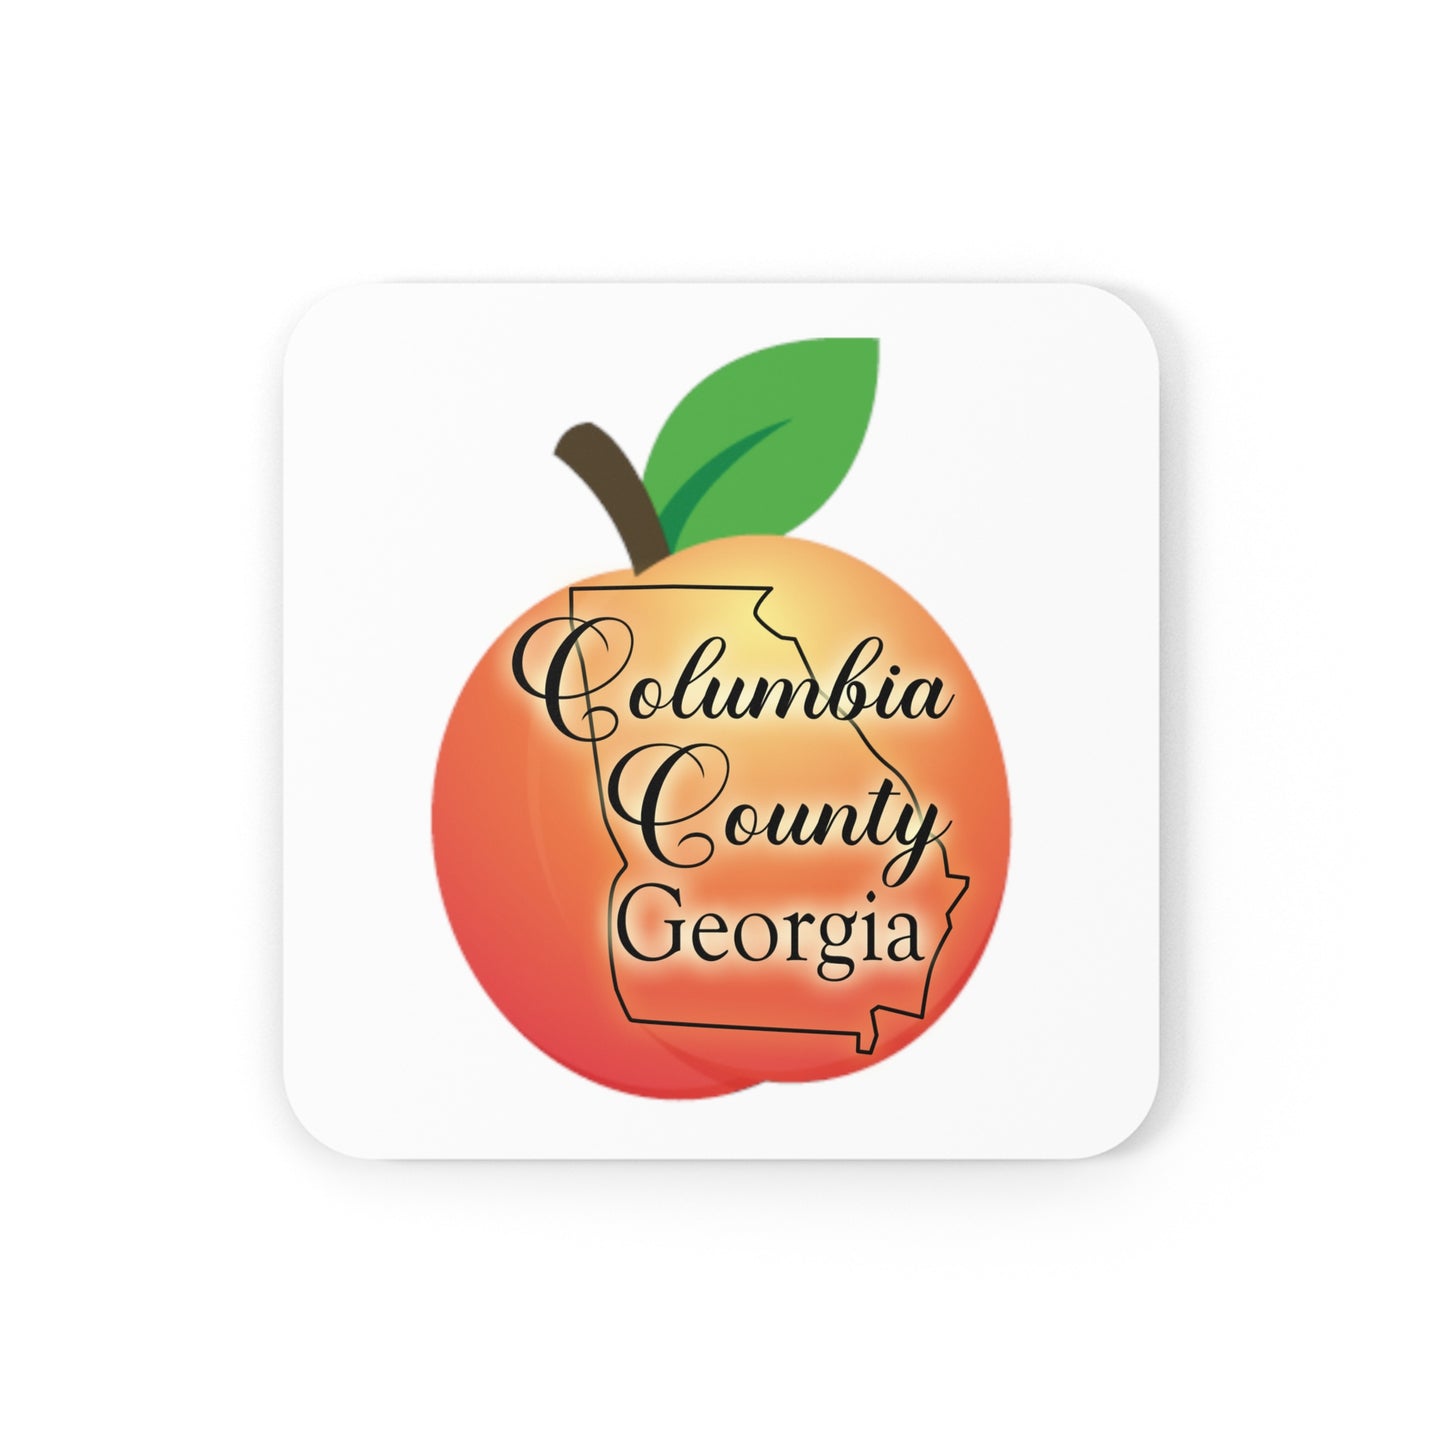 Columbia County Georgia Corkwood Coaster Set